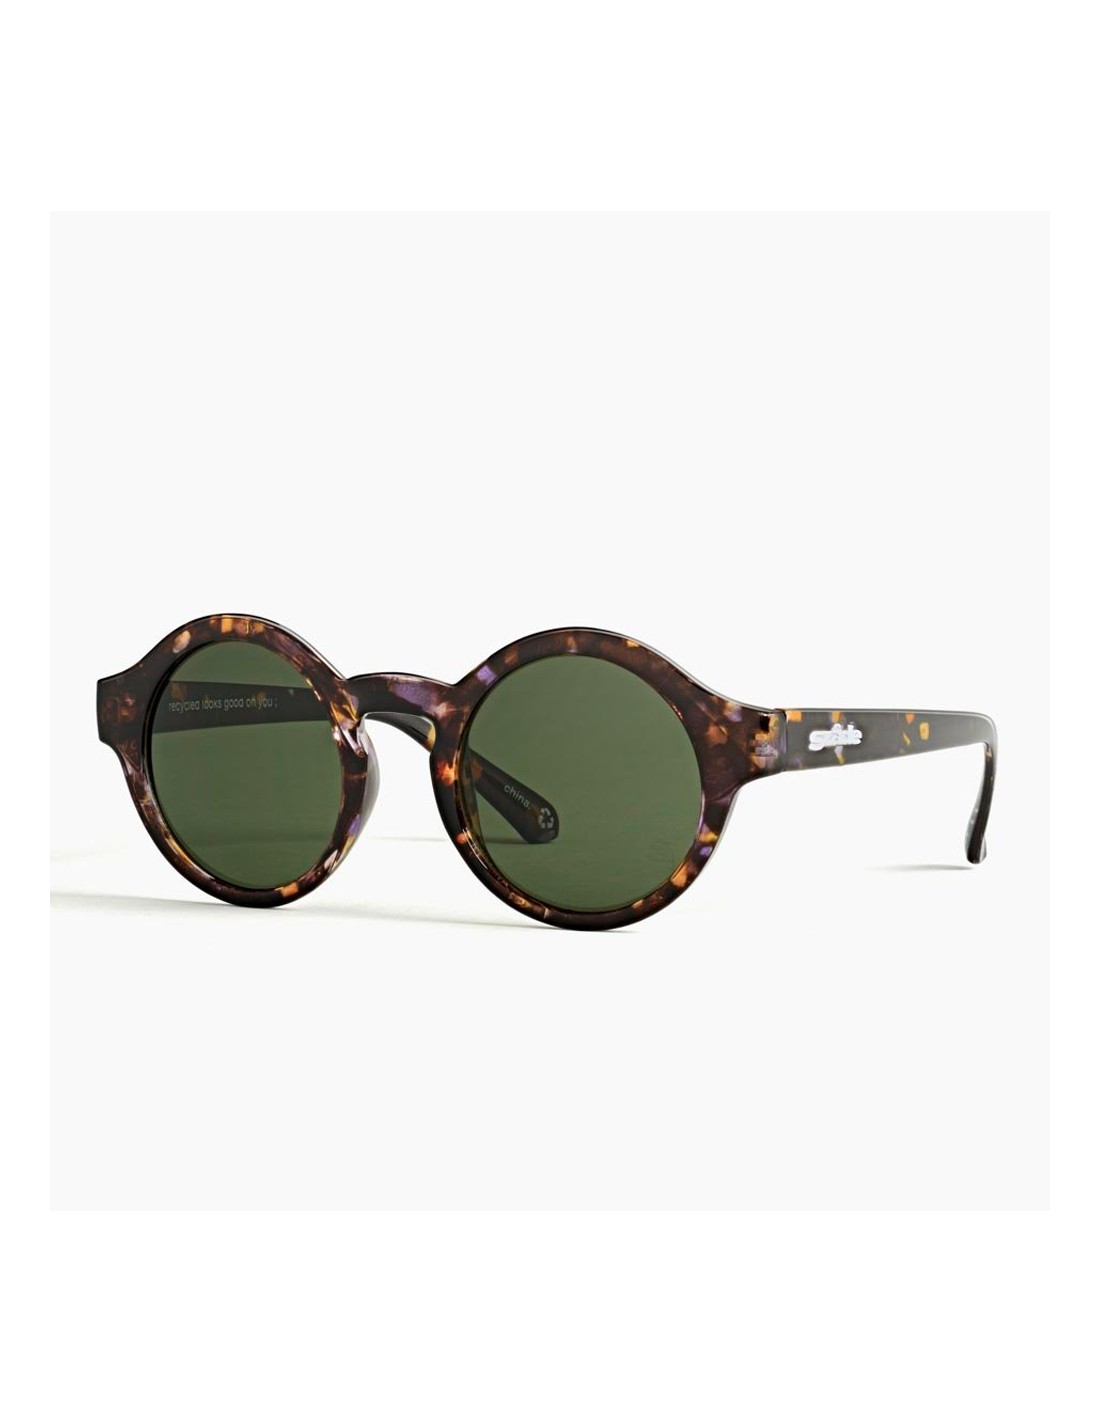 Mykita Saima Sunglasses | FREE Shipping - Go-Optic.com